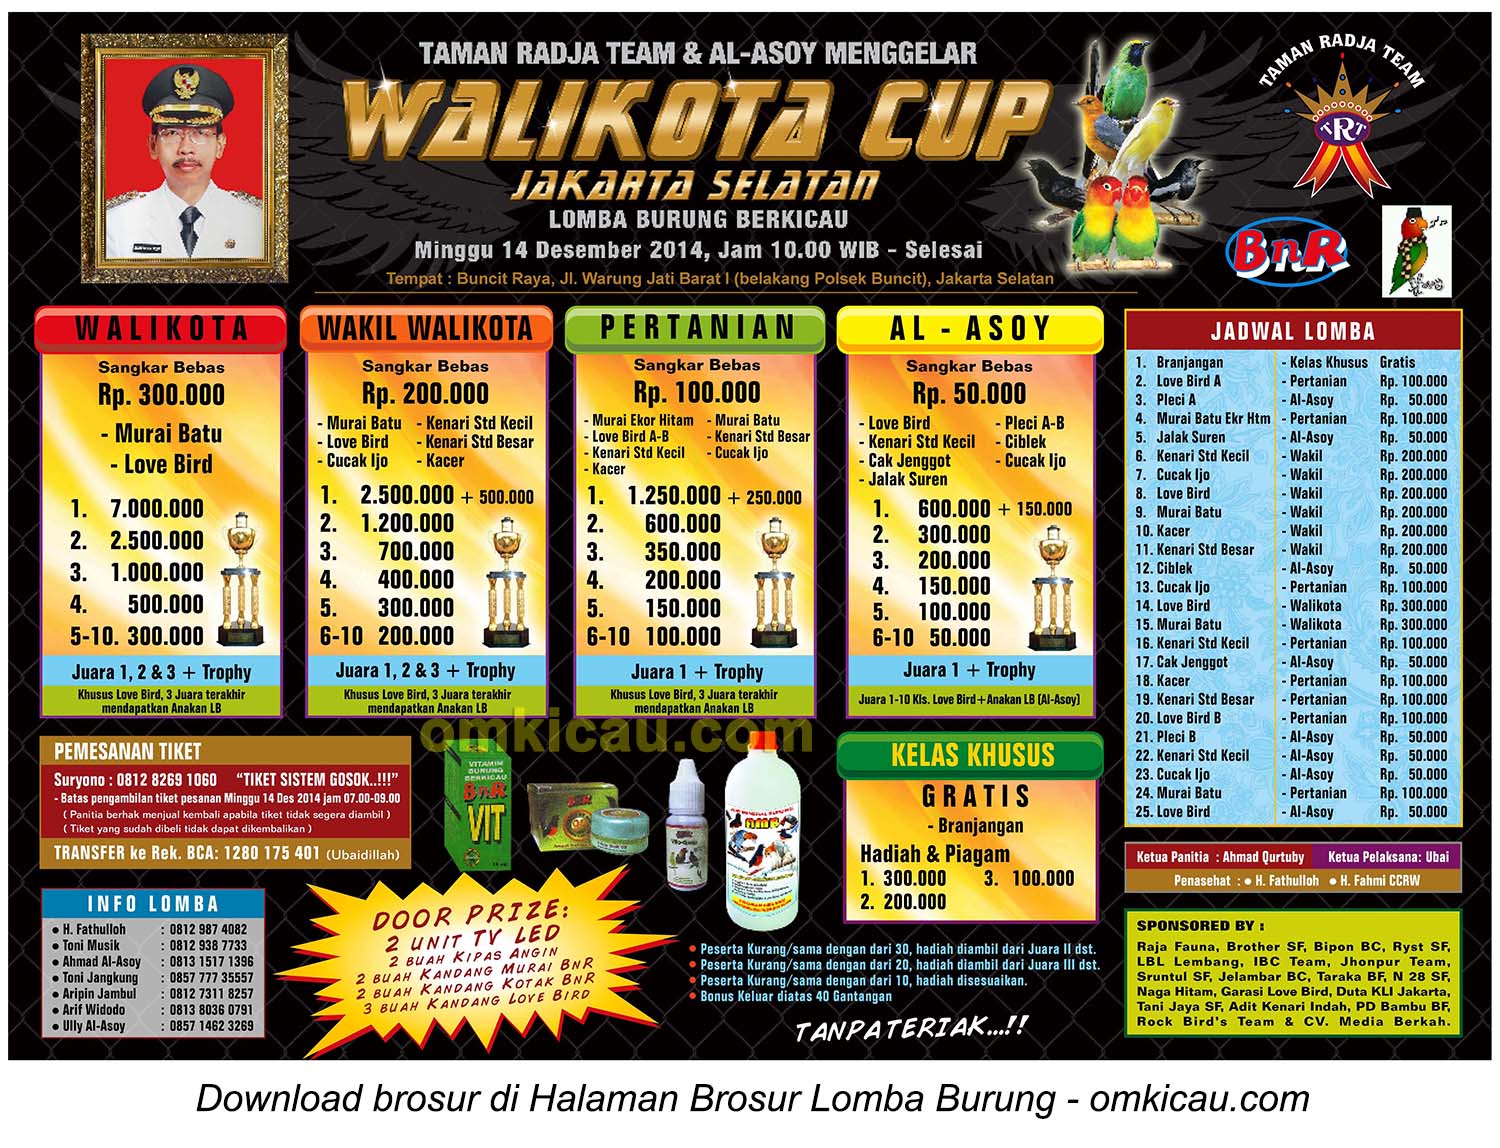 Brosur Revisi Lomba Burung Berkicau Wali Kota Cup, Jakarta Selatan-, 14 Desember 2014